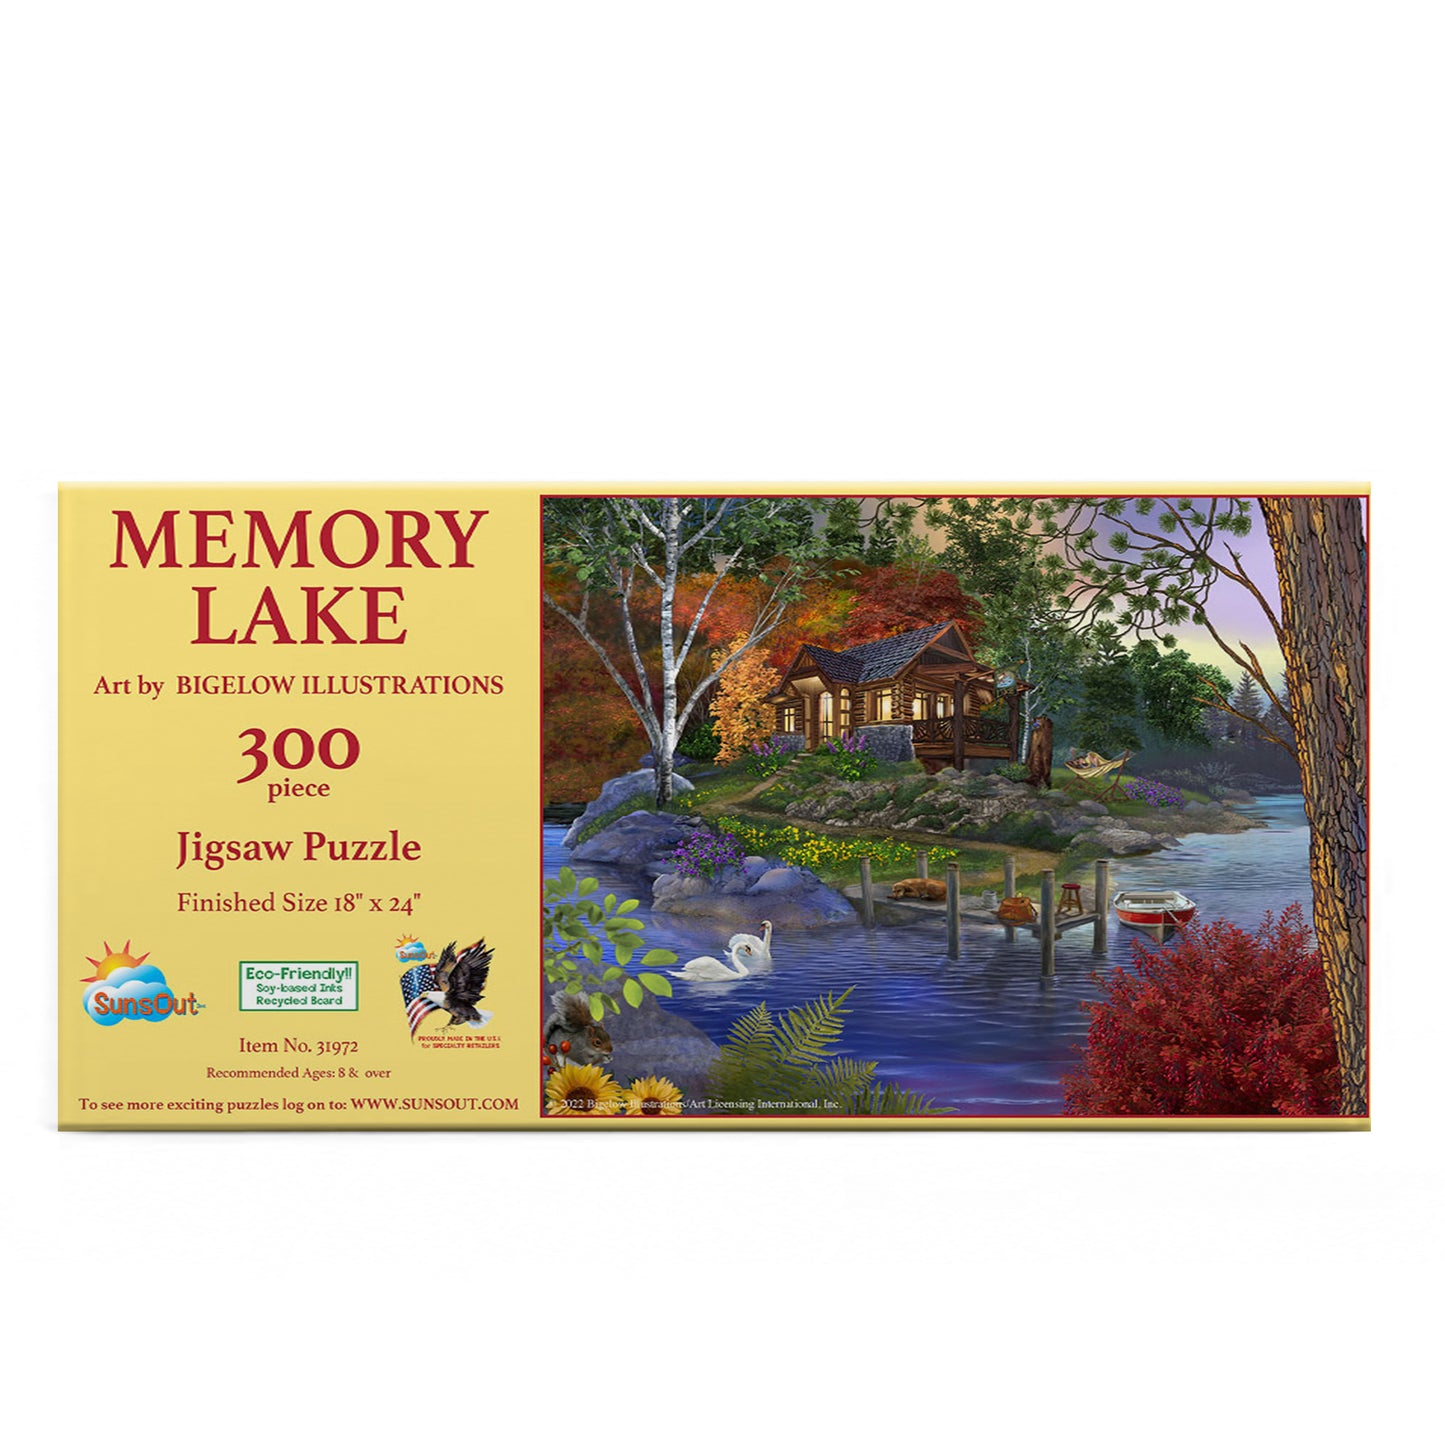 Memory Lake - 300 - 300 Piece Jigsaw Puzzle